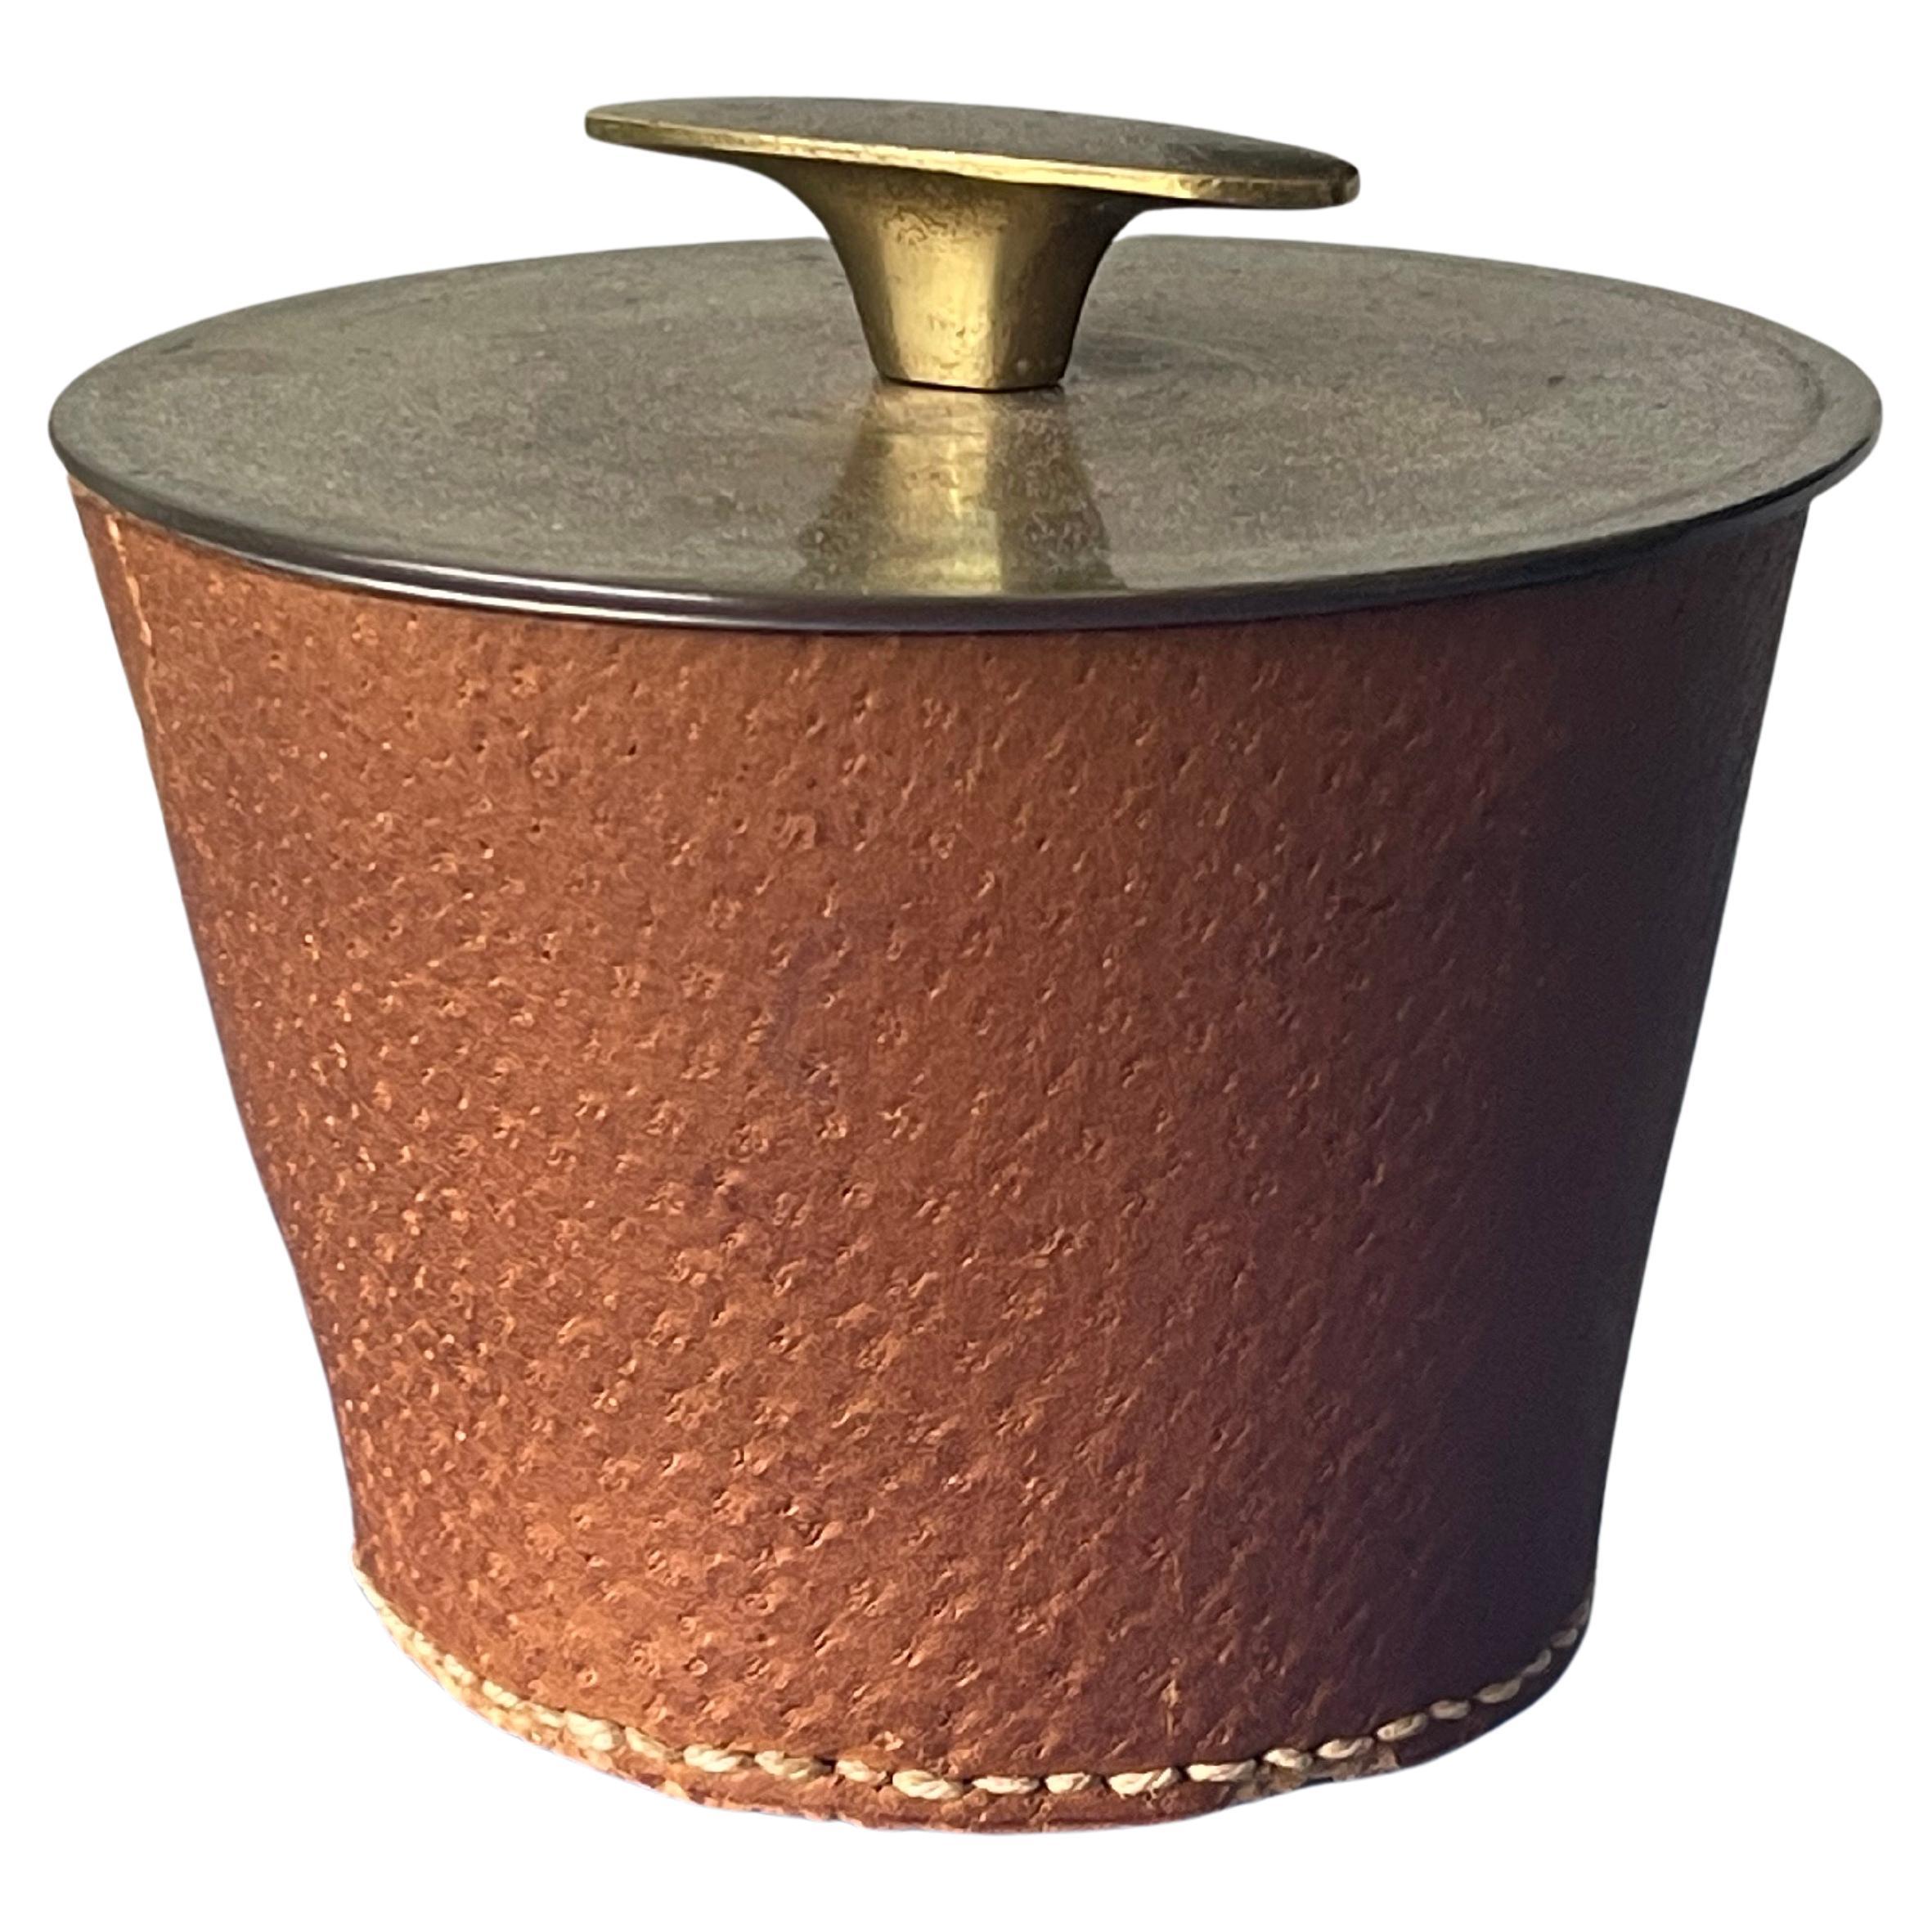 Carl Aubock Tobacco Tin Lidded Bowl Model 3617